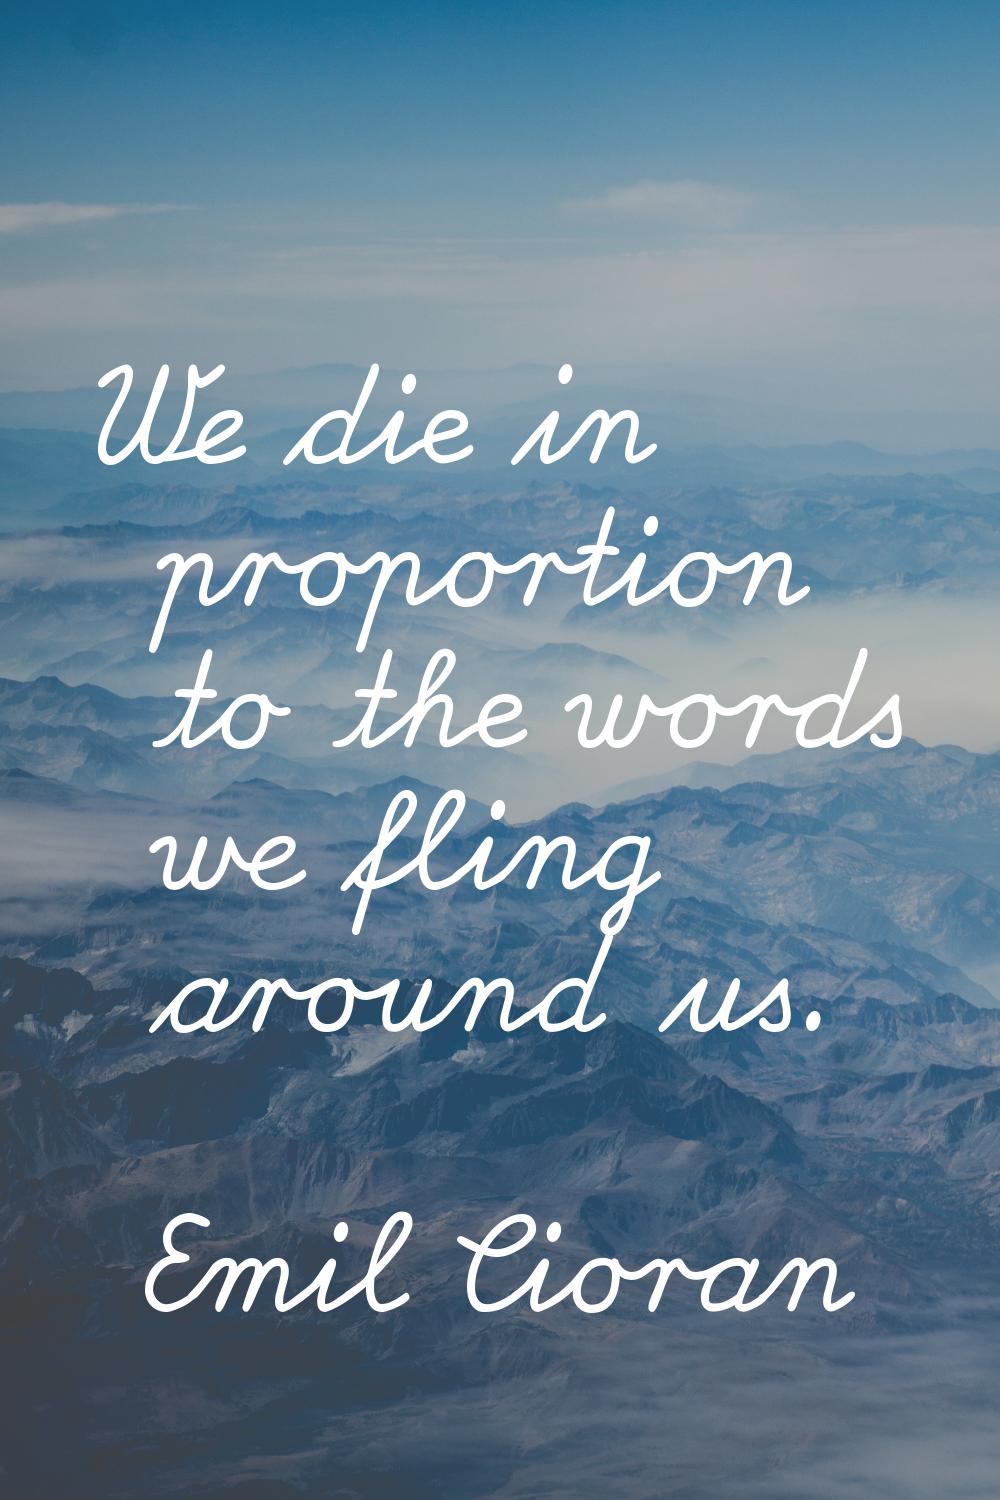 We die in proportion to the words we fling around us.